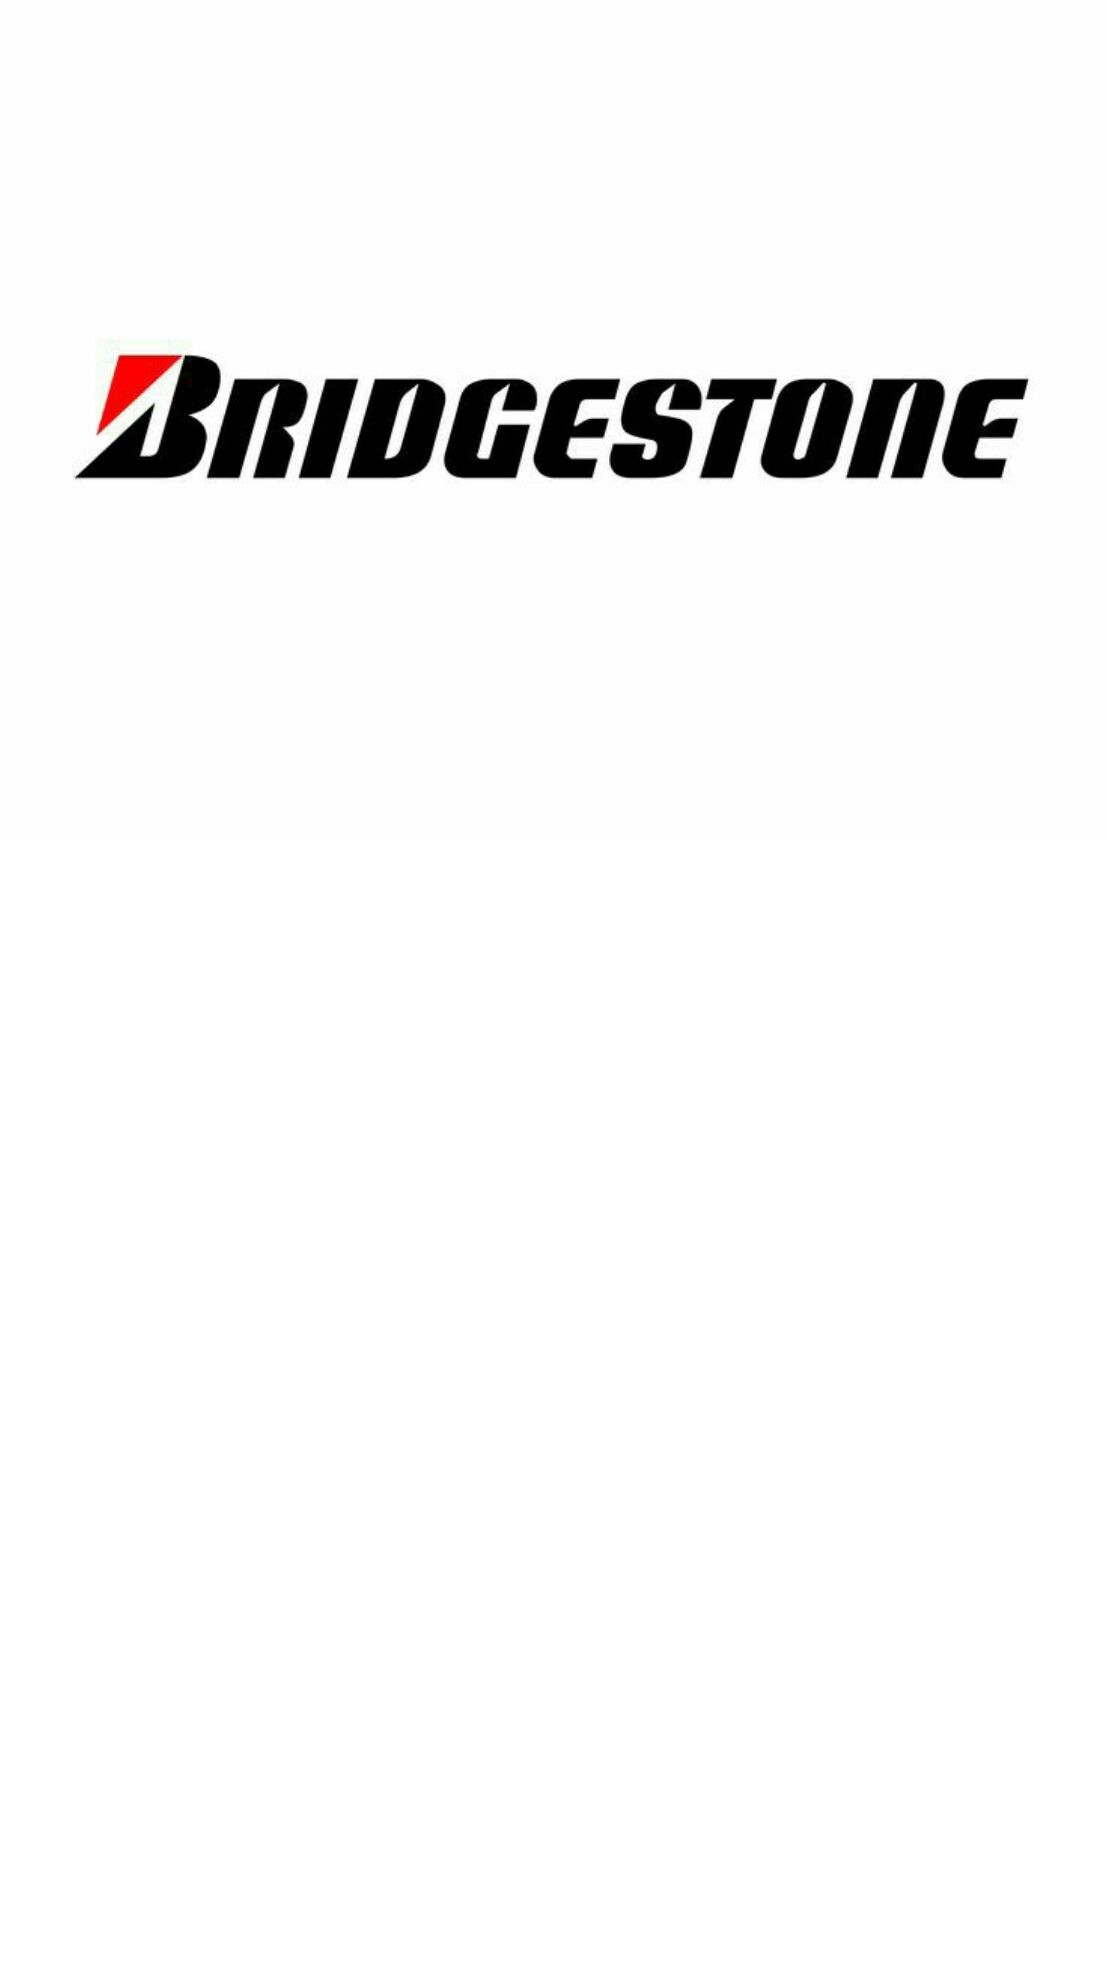 Cars Bridgestone Black Wallpaper Android iPhone White In